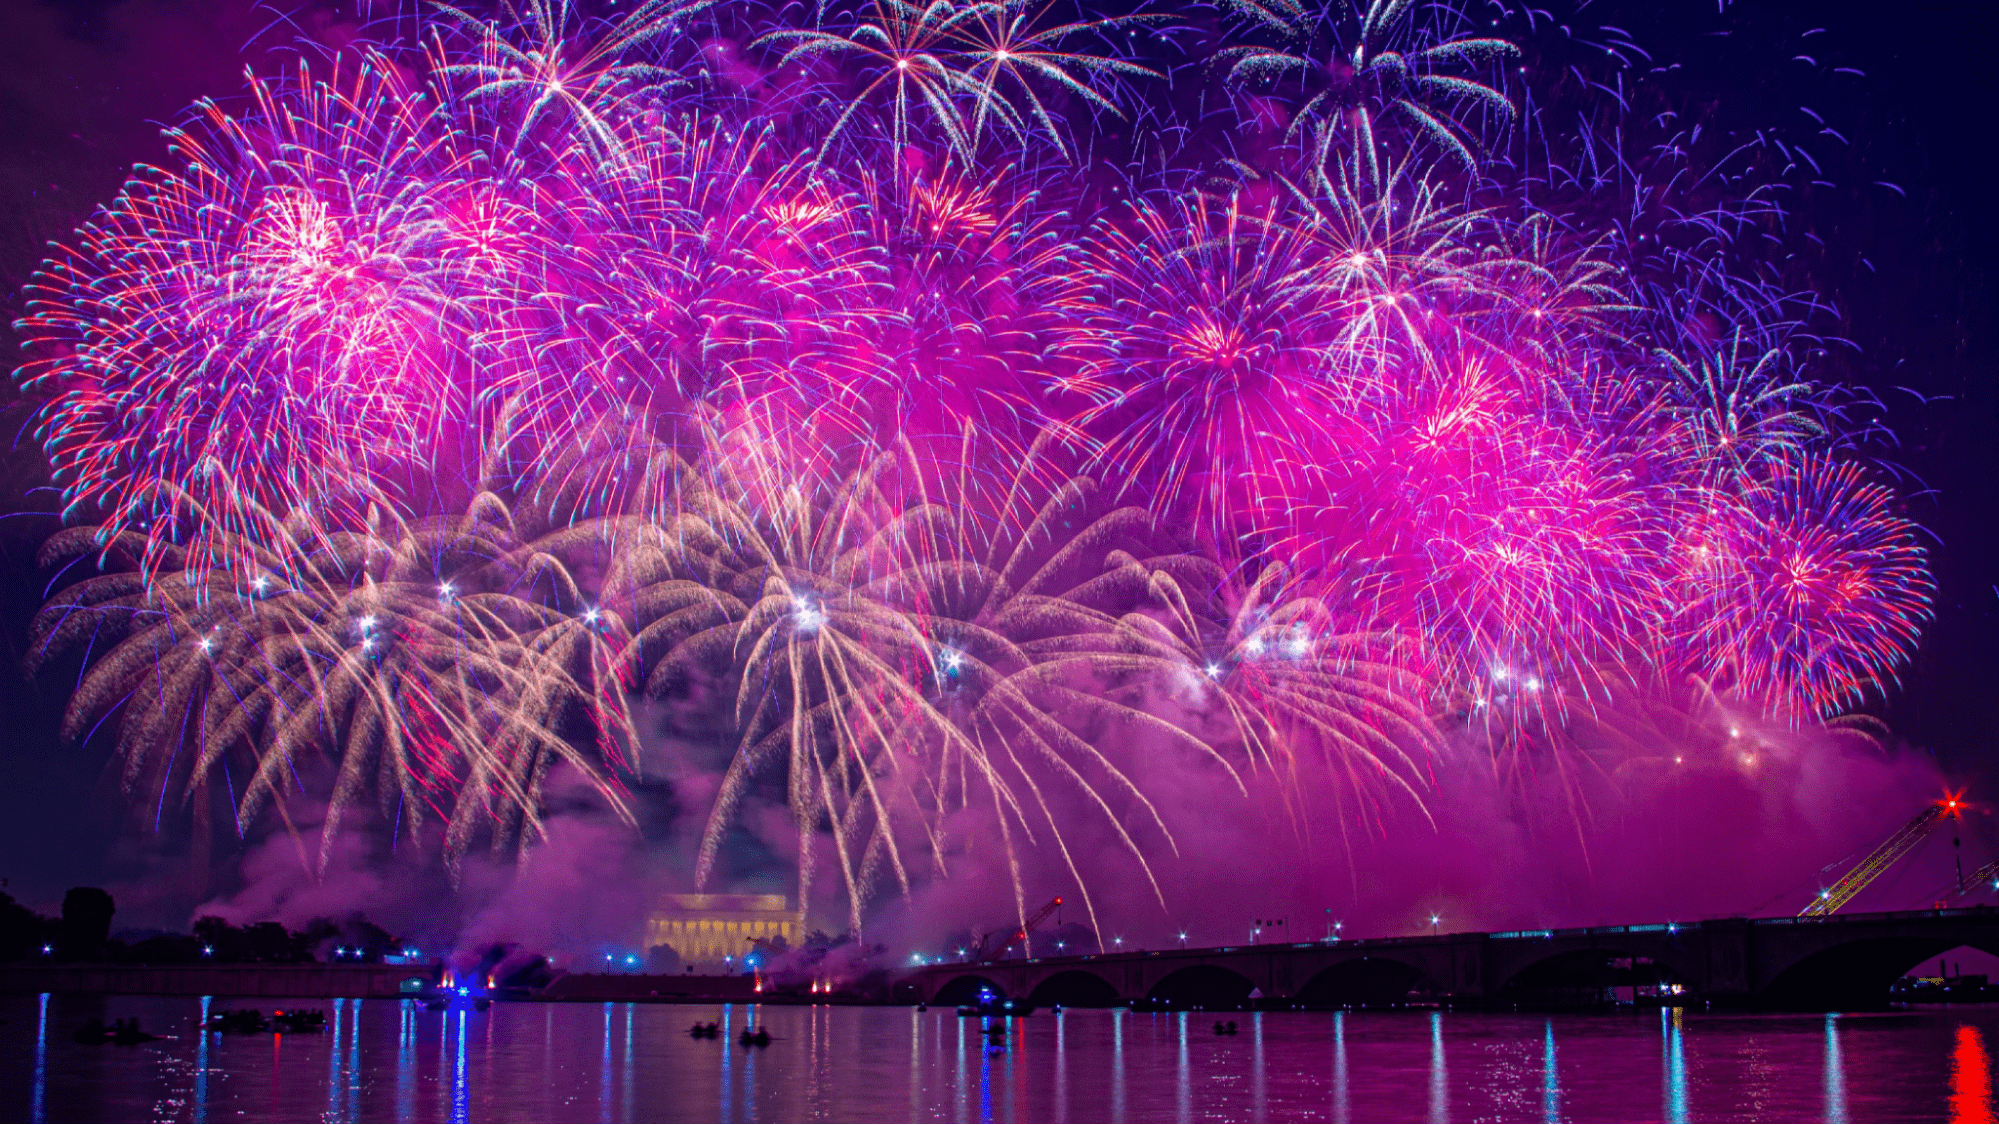 View of fireworks display in Washington, DC